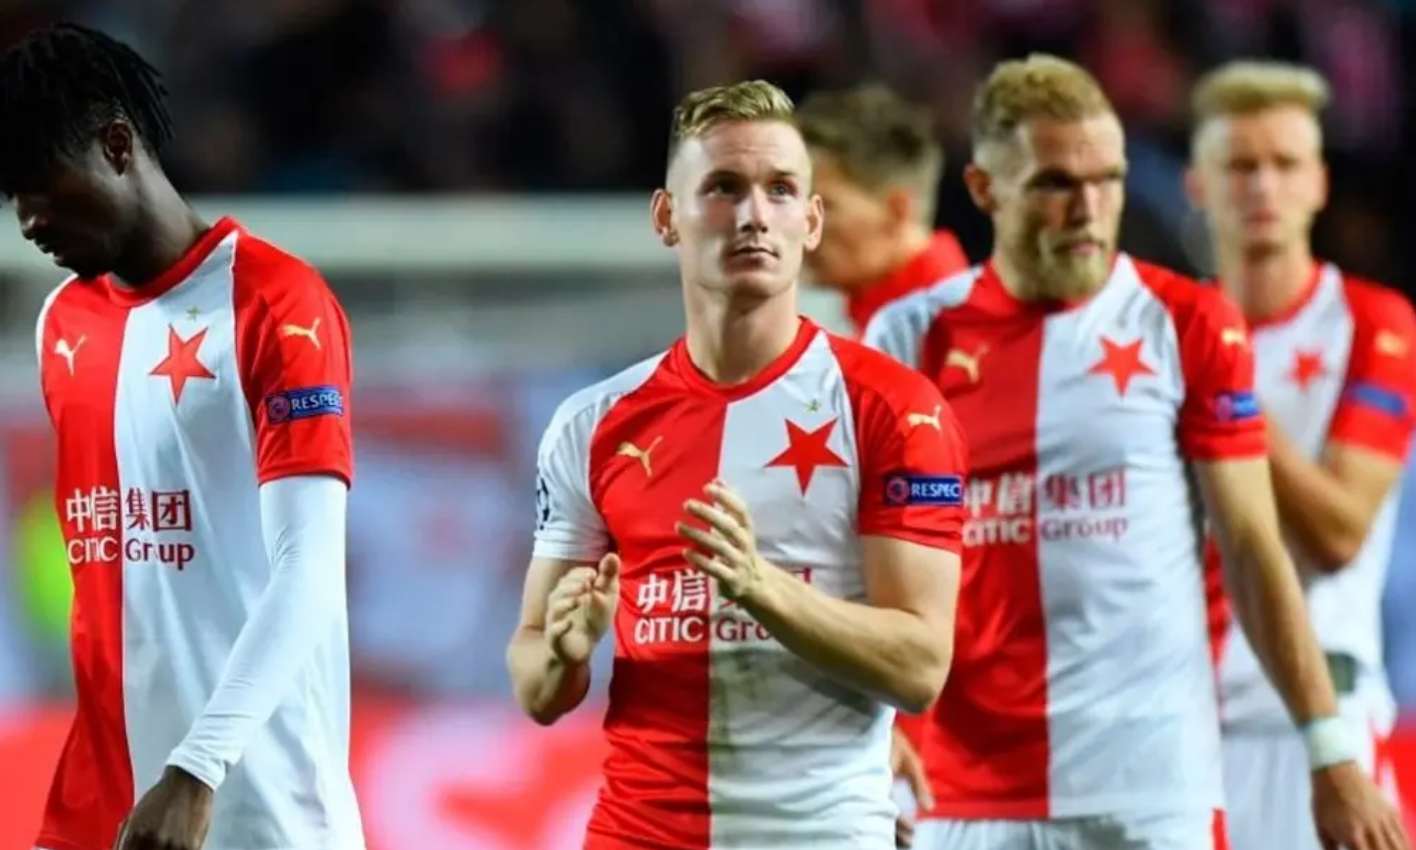 Dnipro-1 vs Slavia Praha Prediction and Betting Tips